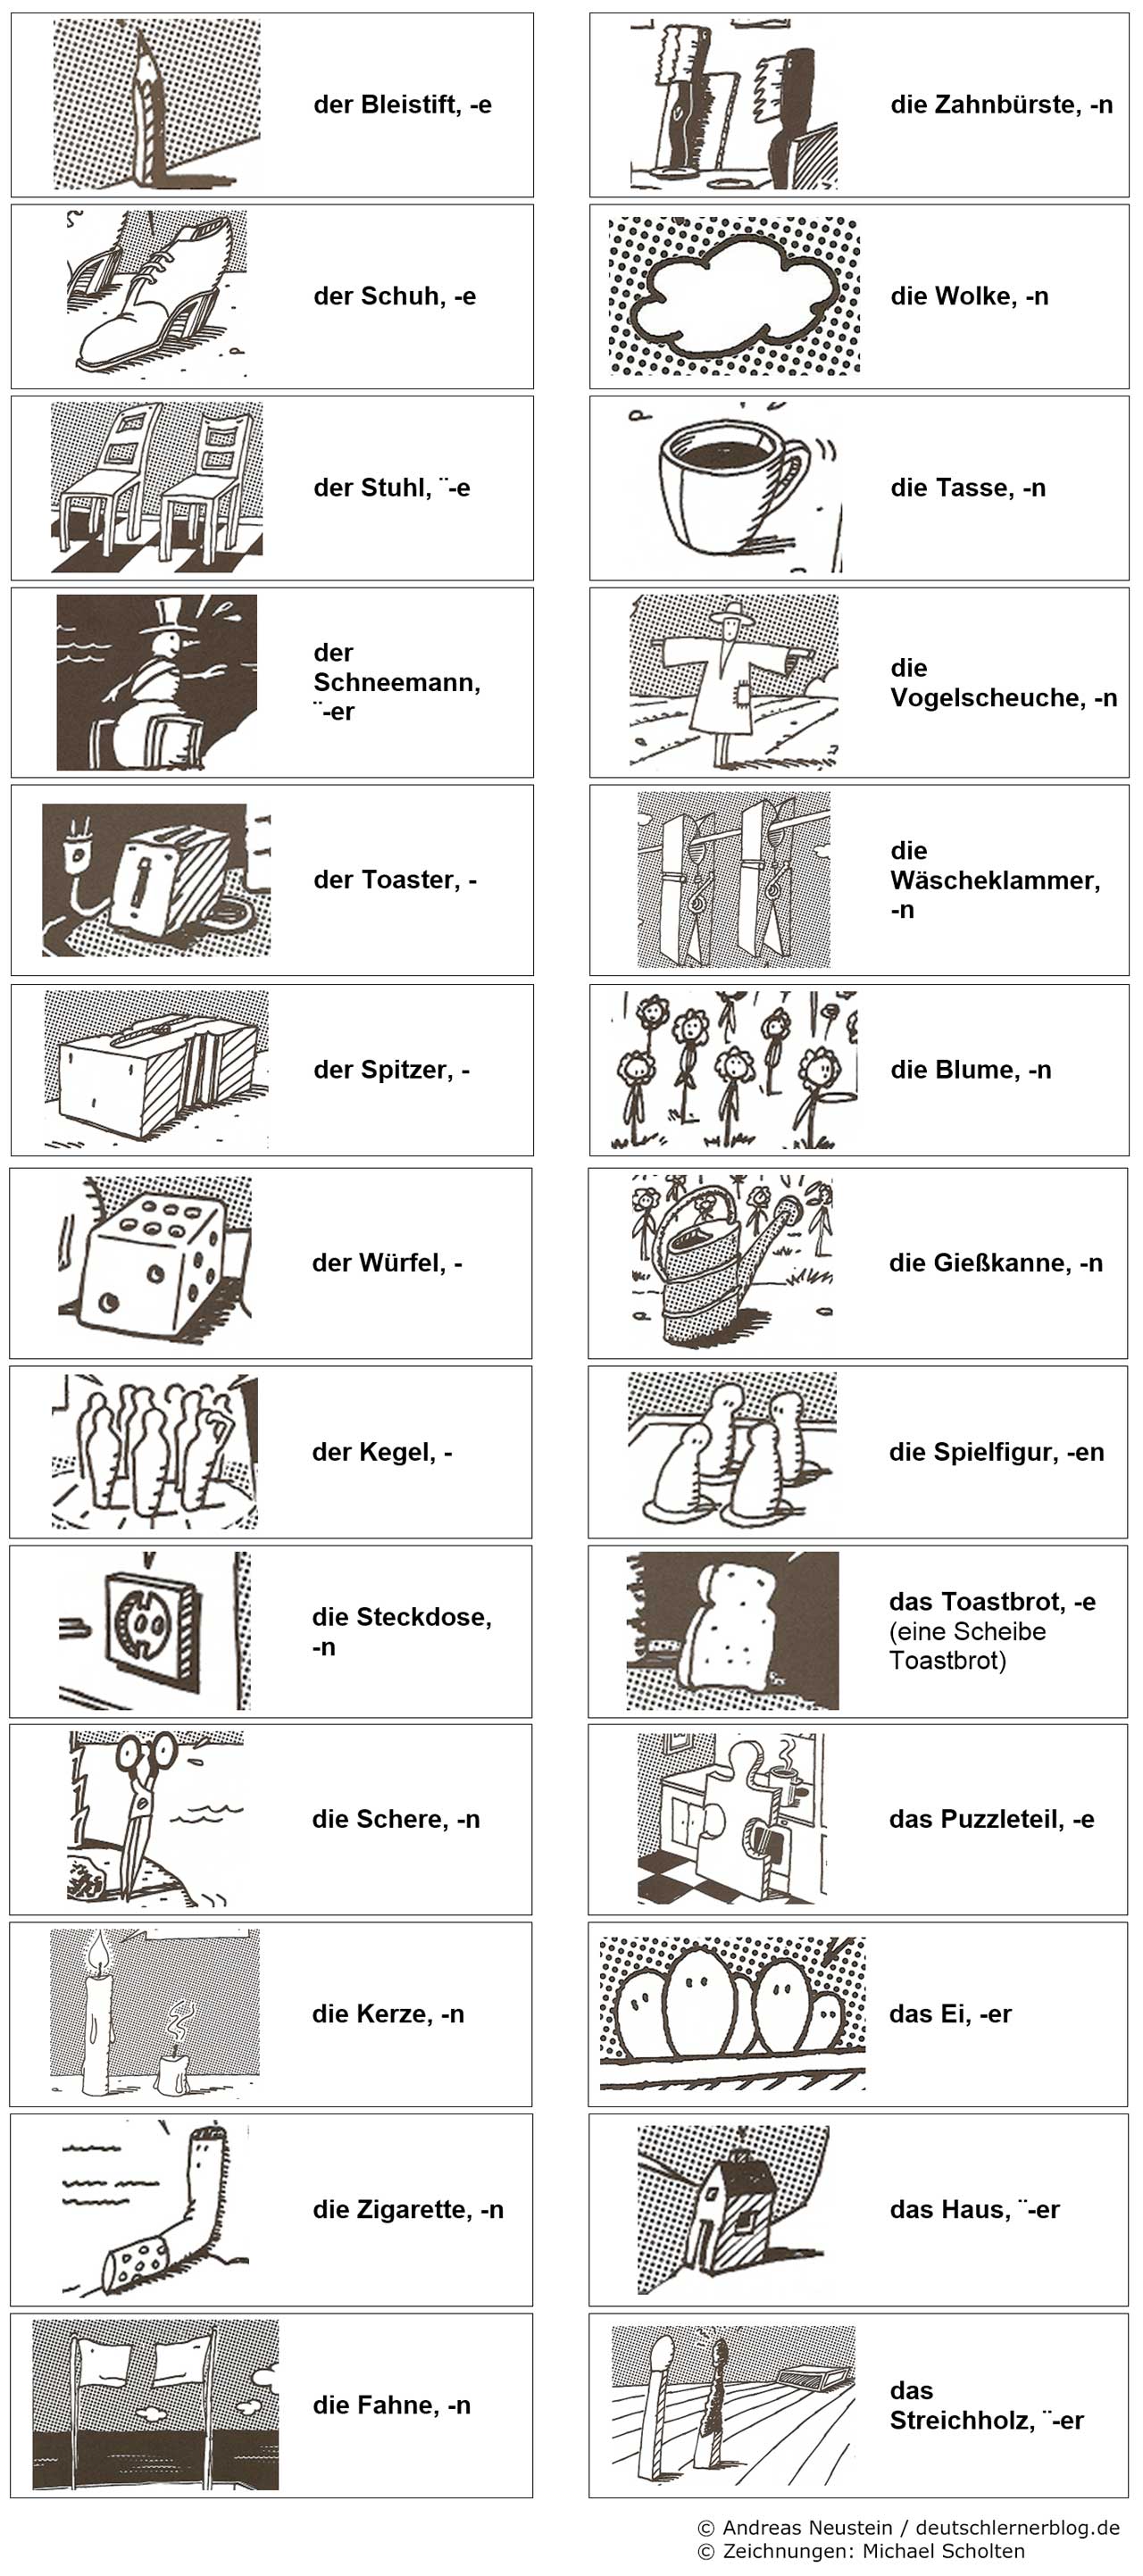 deutsche Cartoons - Wortschatz lernen mit Cartoons - Cartoons michael scholten